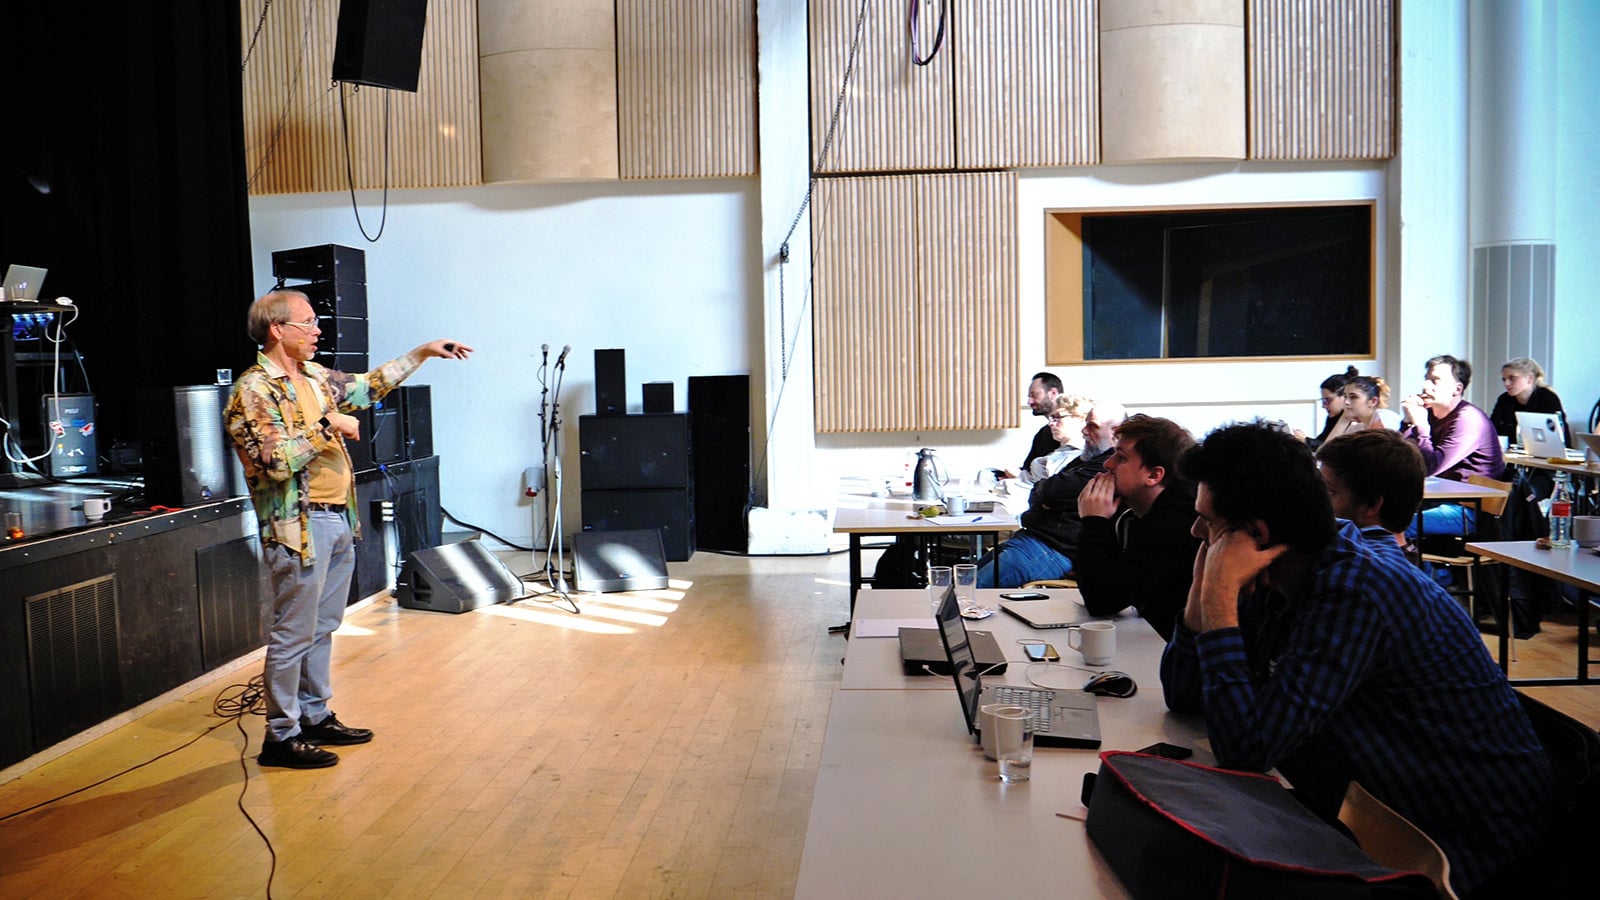 Meyer Sound Training Sessions Lay Groundwork for Unprecedented Roskilde Festival Partnership